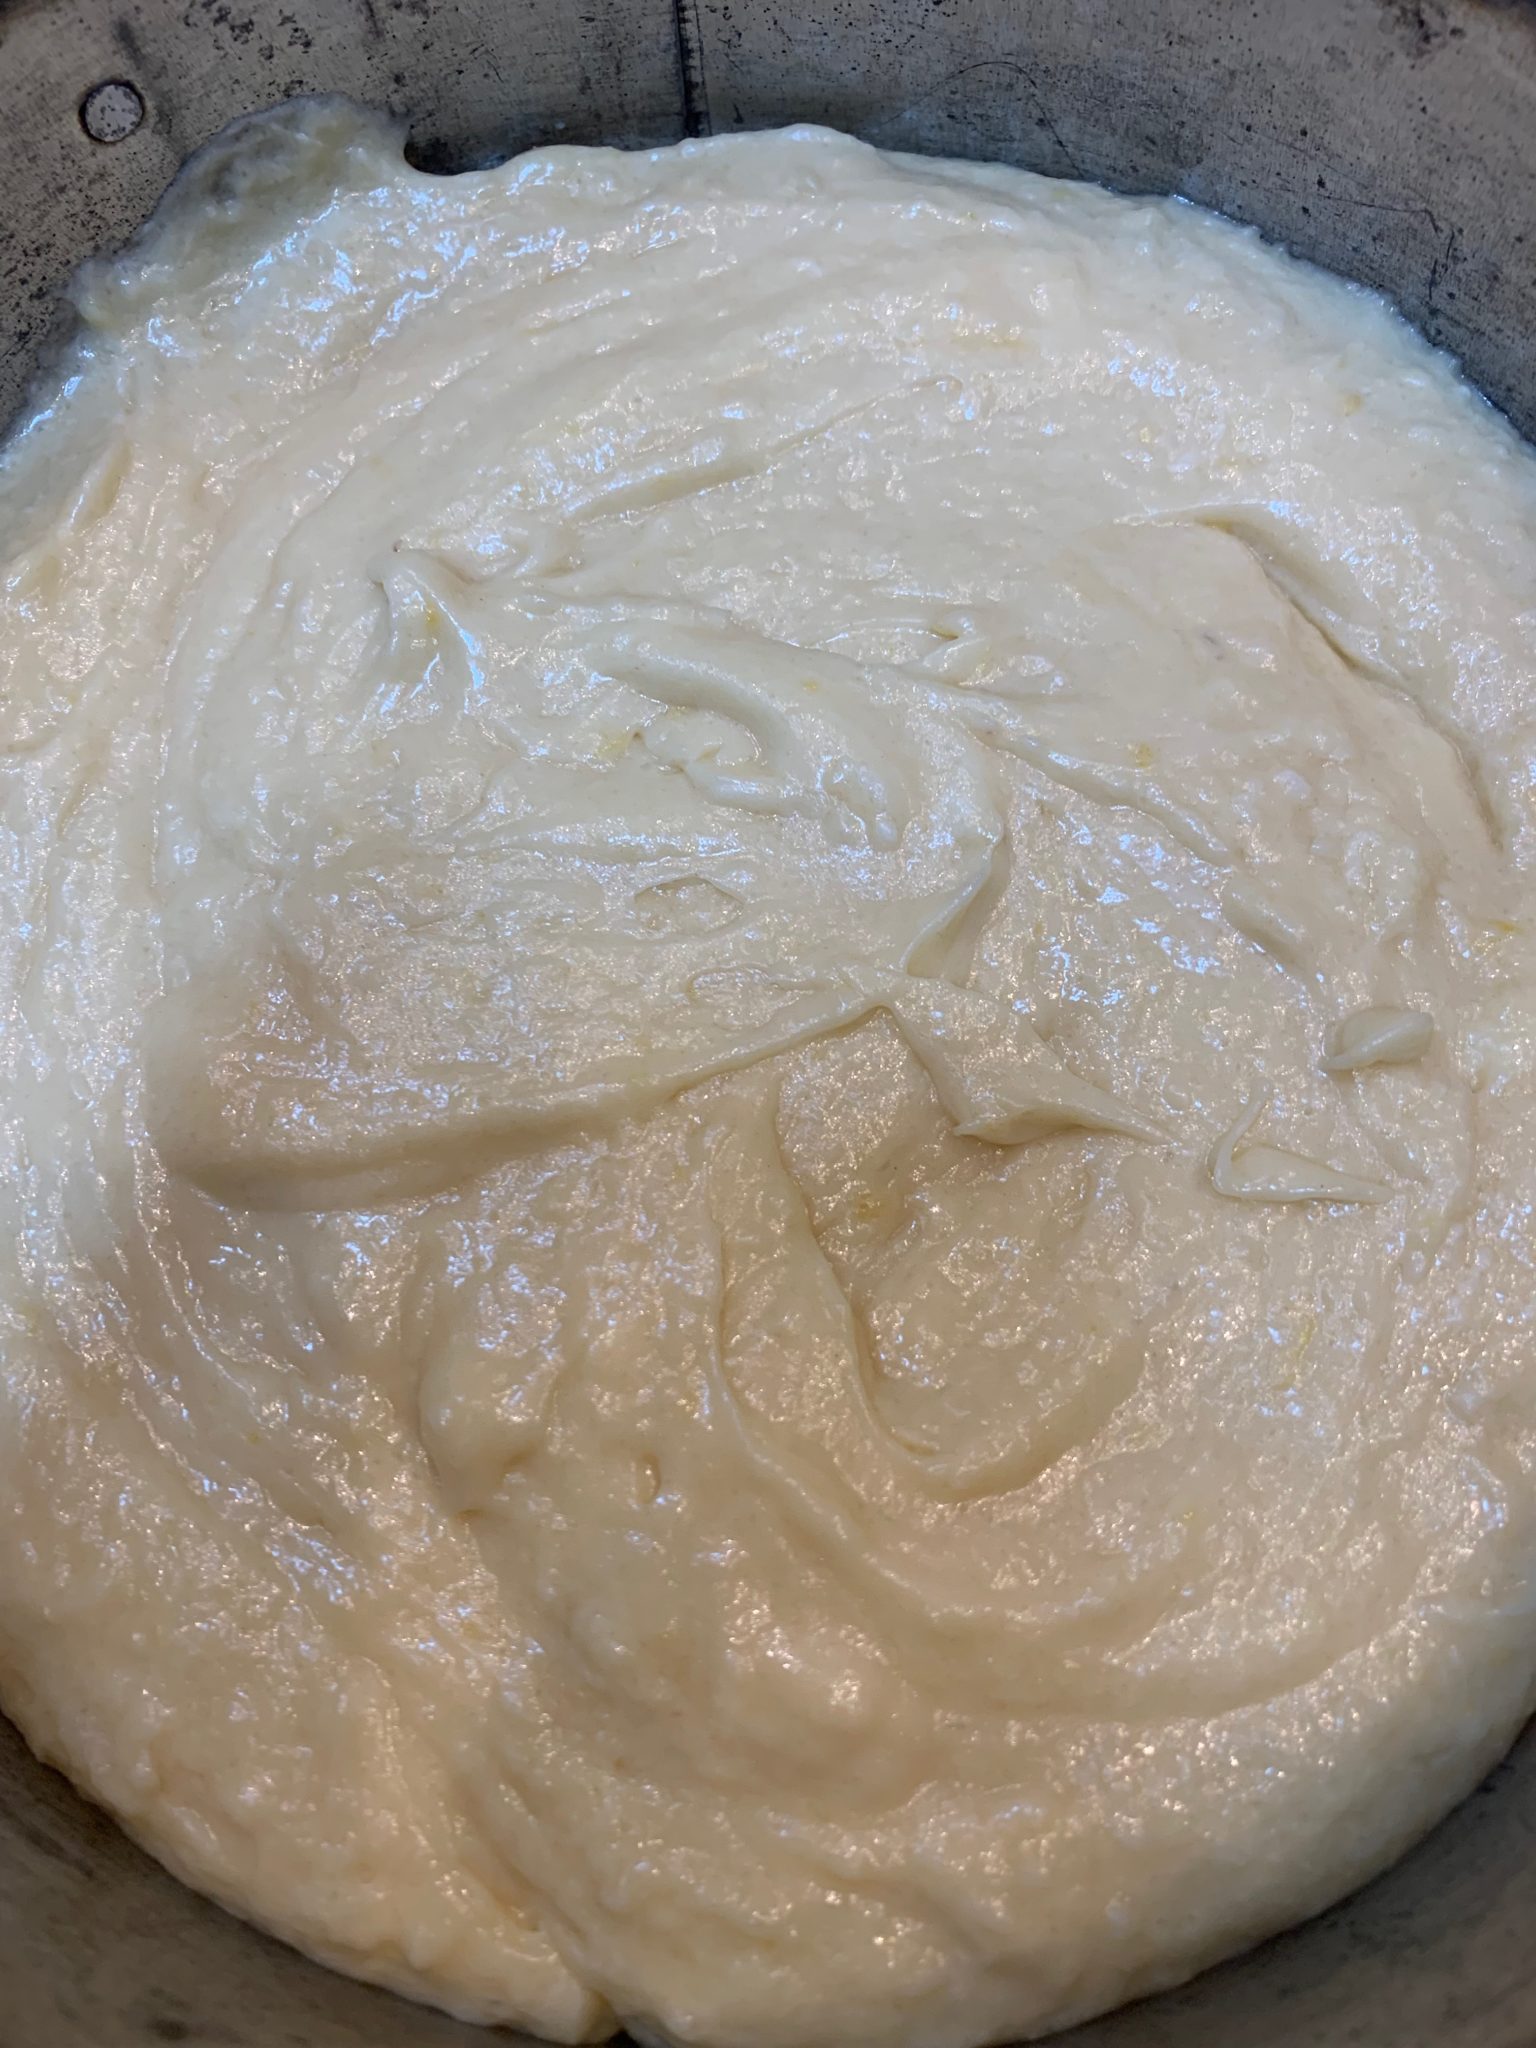 Butter cake batter in pan